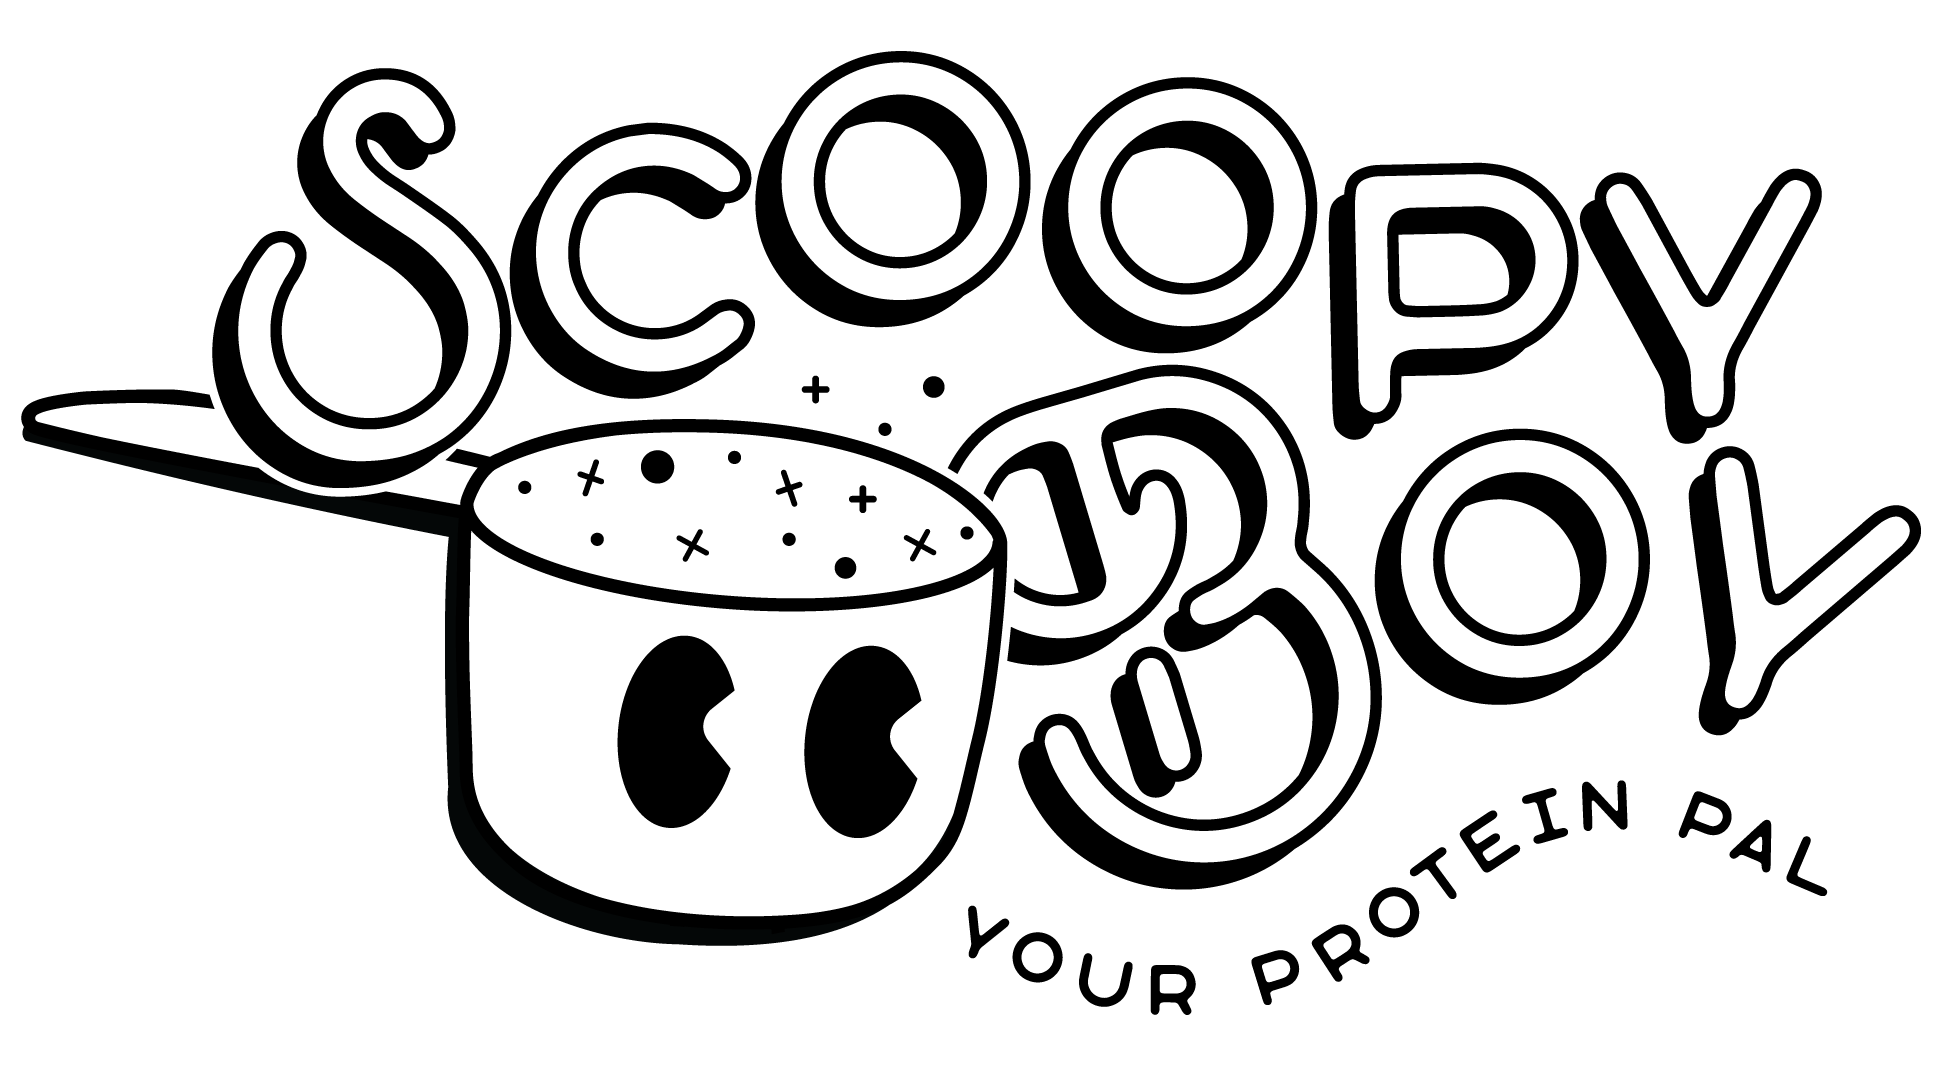 Scoopy Boy